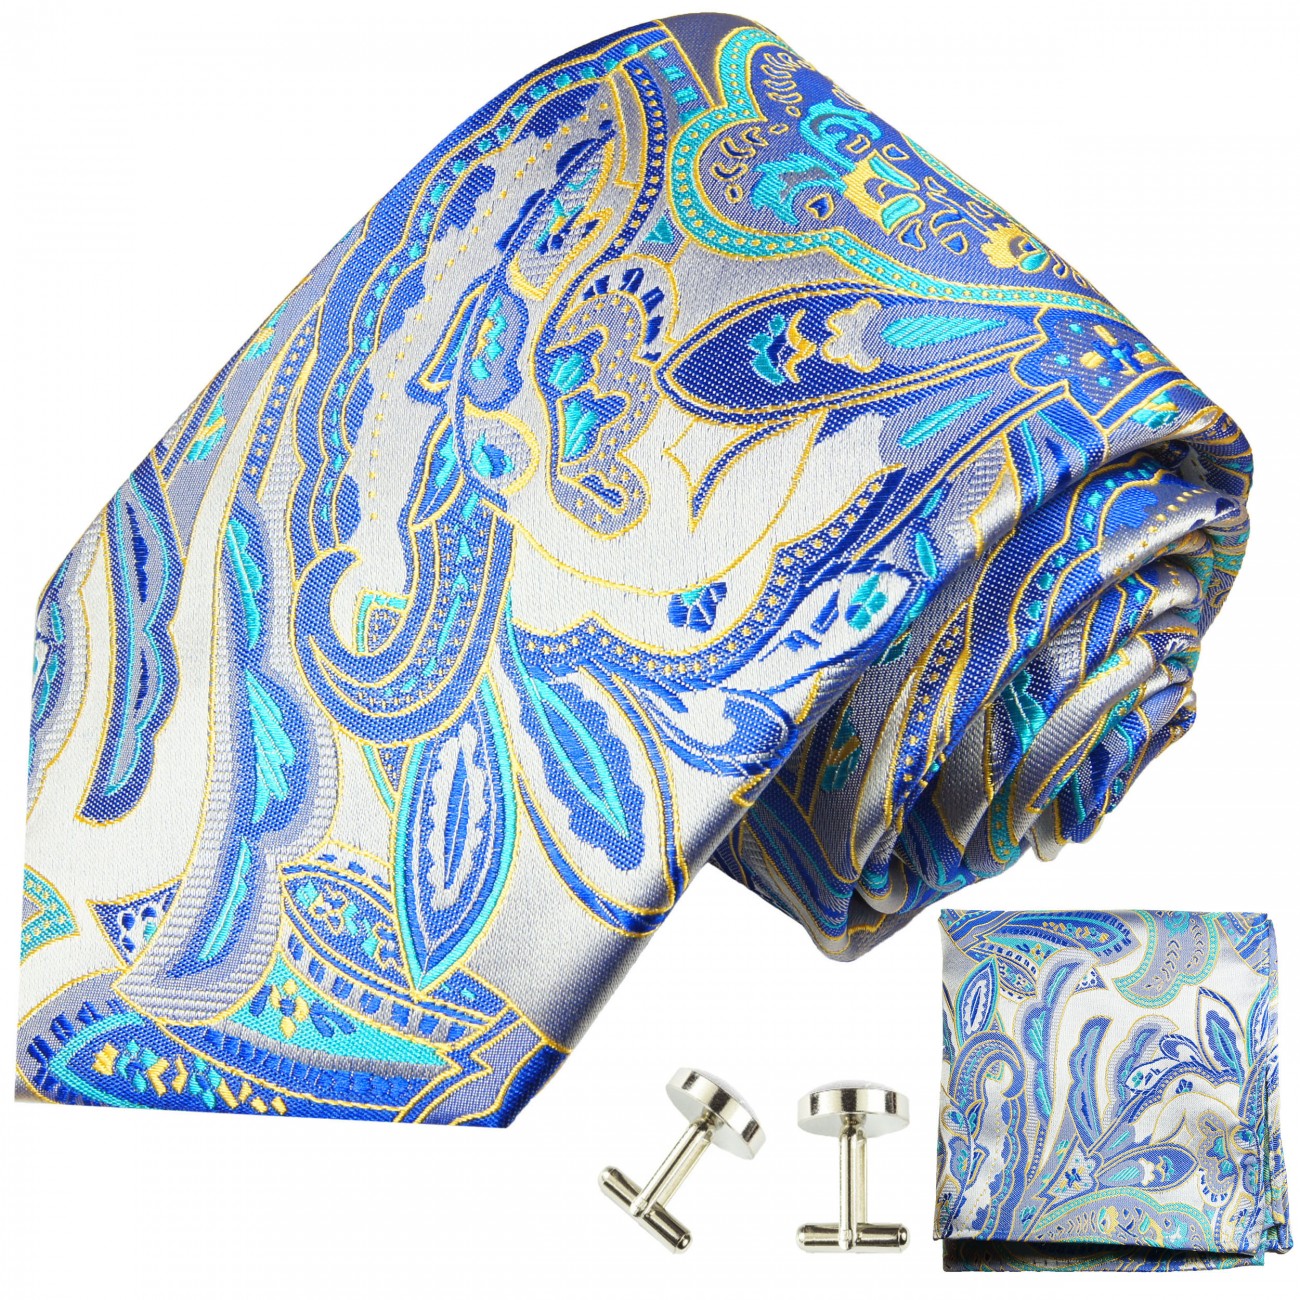 Krawatte blau silber paisley brokat 2019